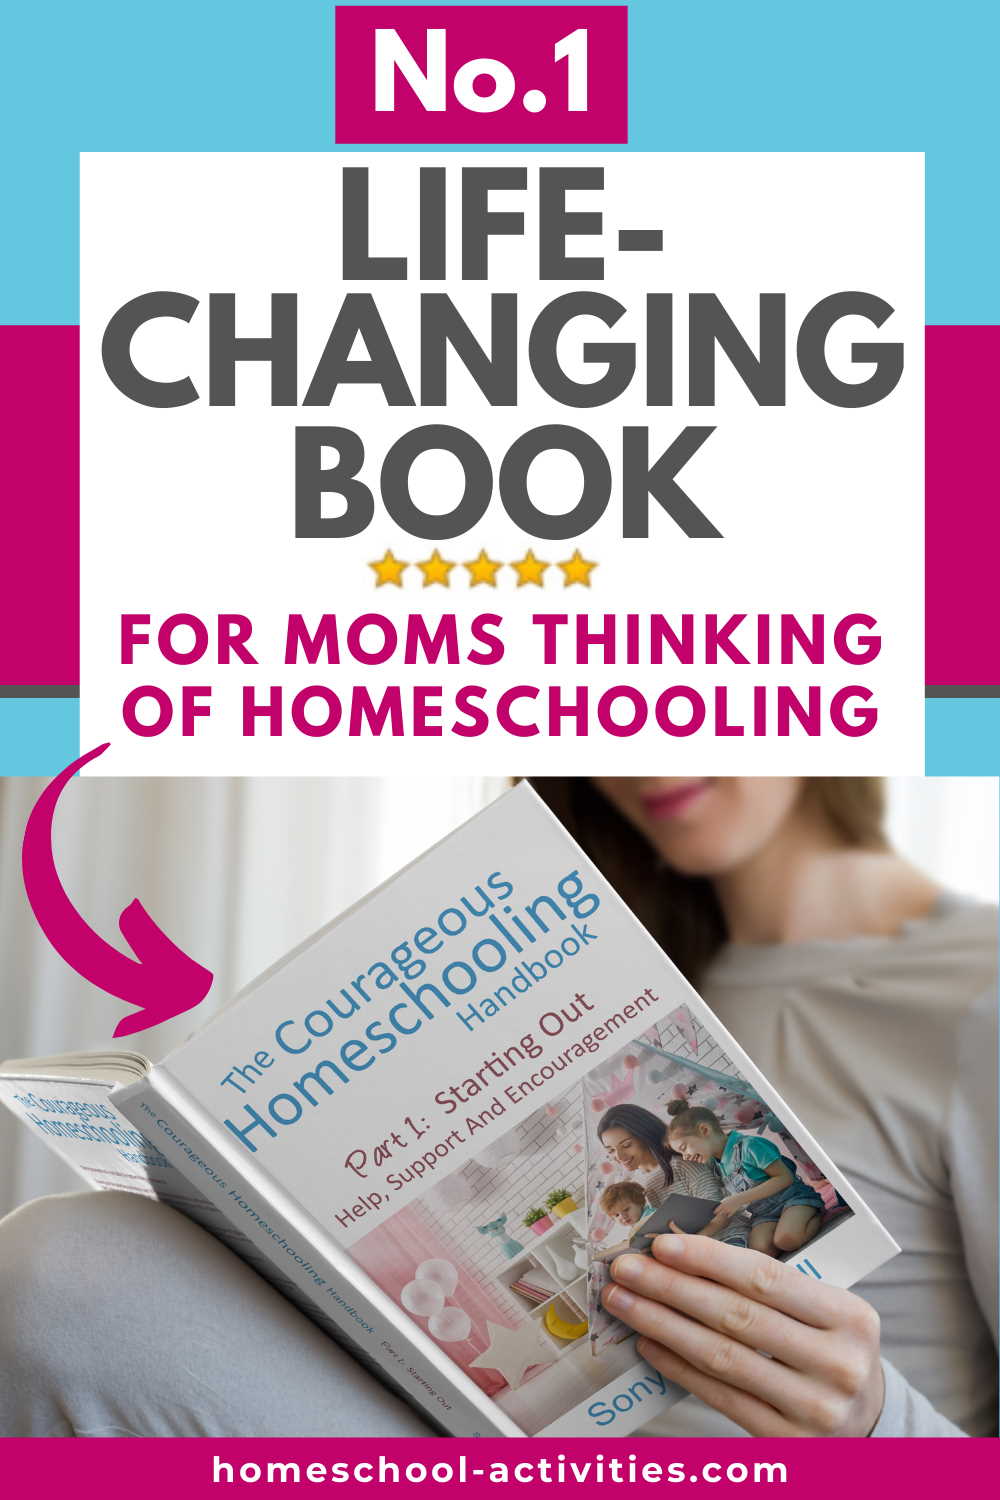 The Courageous Homeschooling Handbook helping homeschoolers starting out